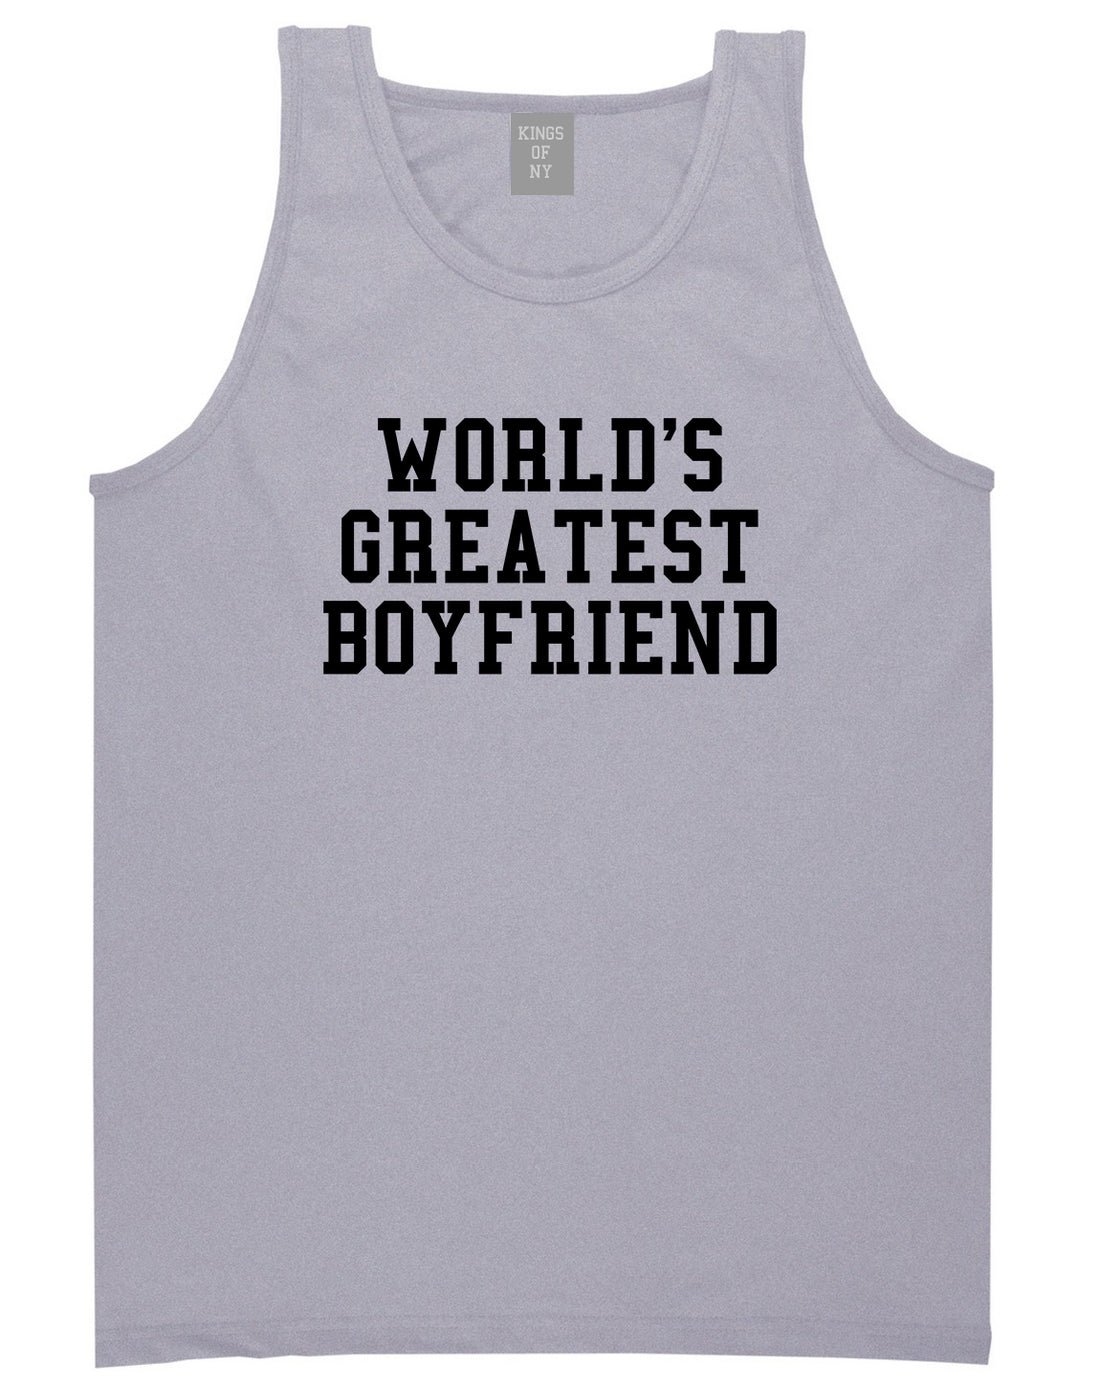 Worlds Greatest Boyfriend Funny Birthday Gift Mens Tank Top T-Shirt Grey